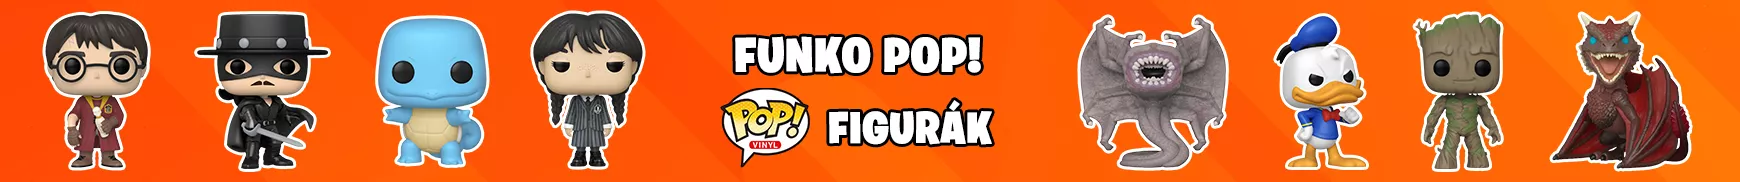 Funko POP! figúrky